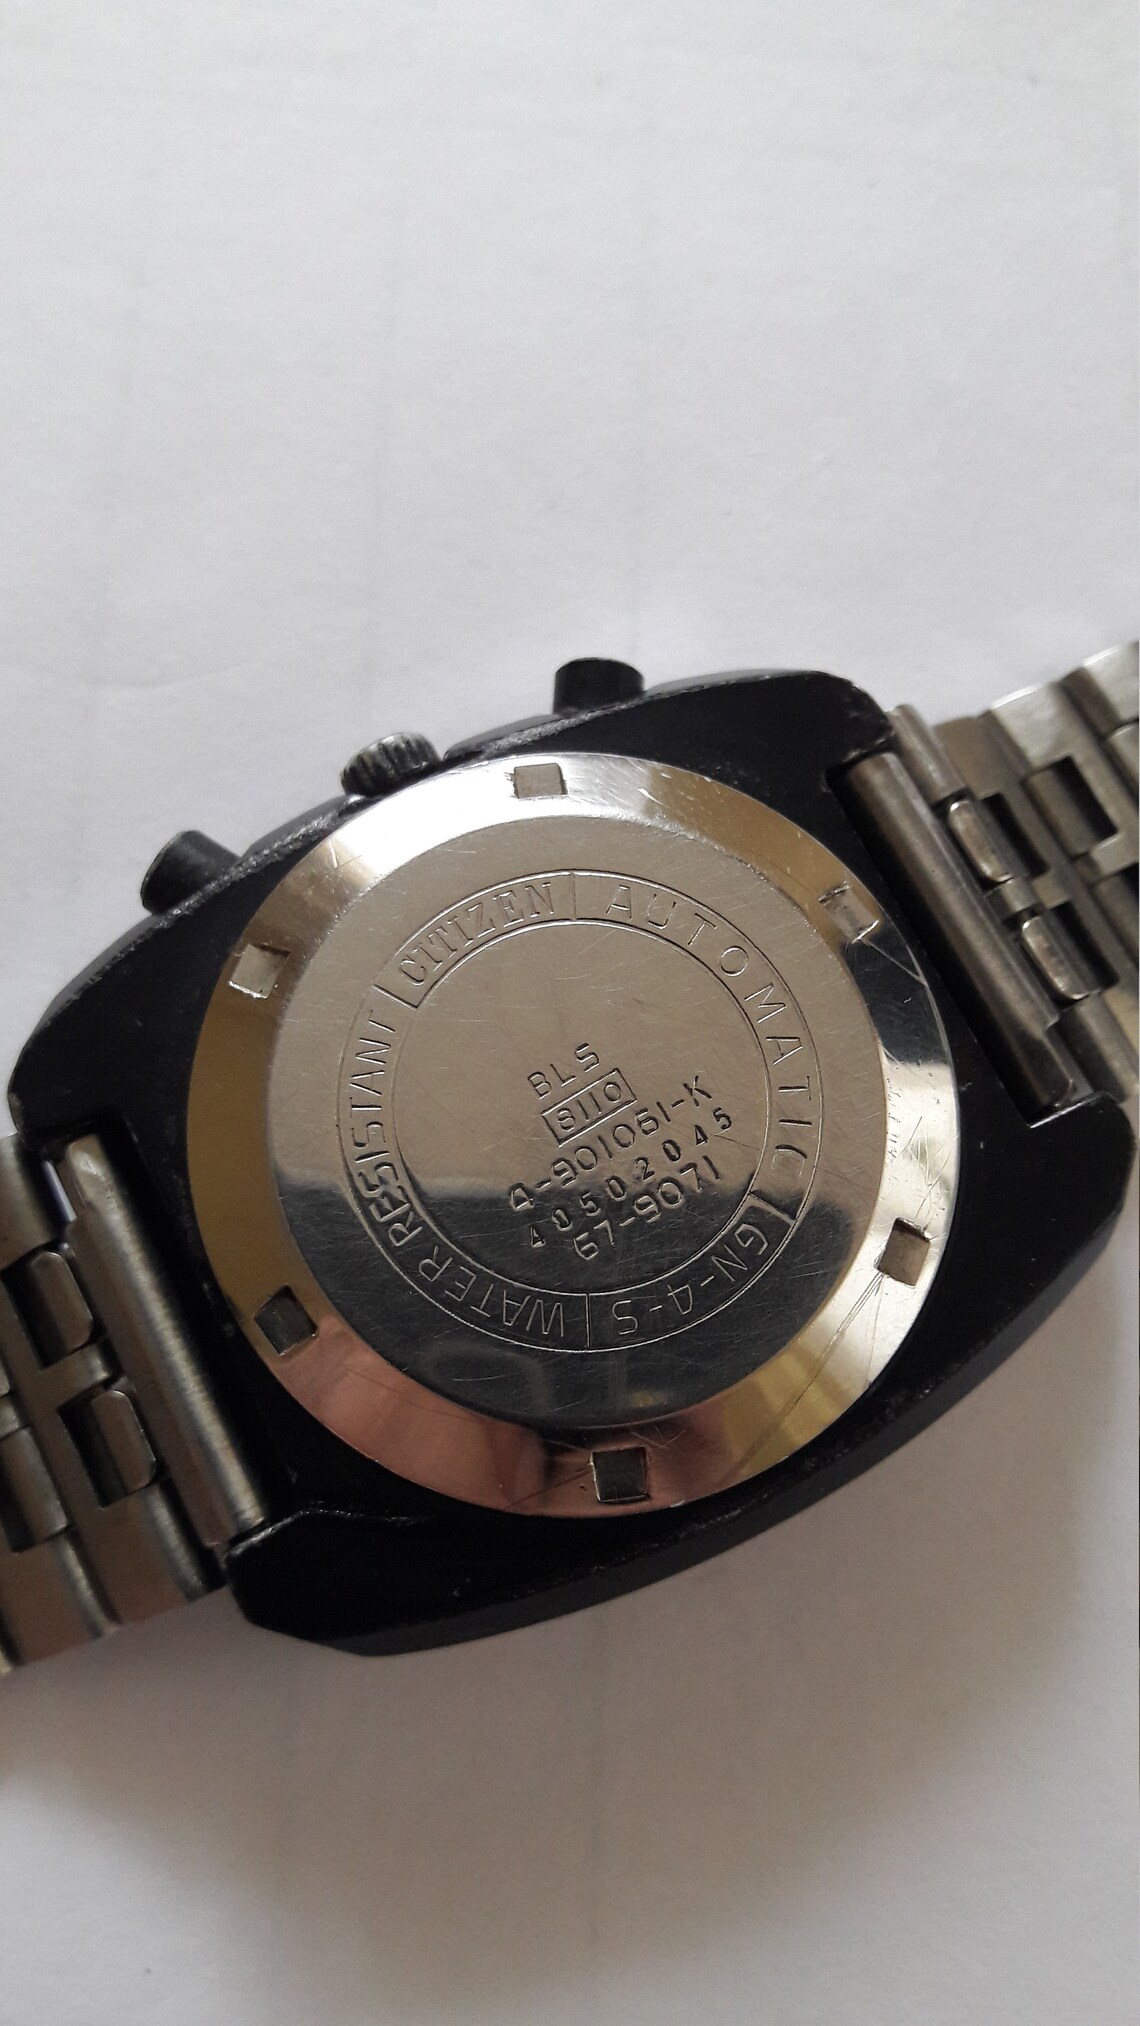 Citizen monaco 67-9071 automatic chronograph | Etsy